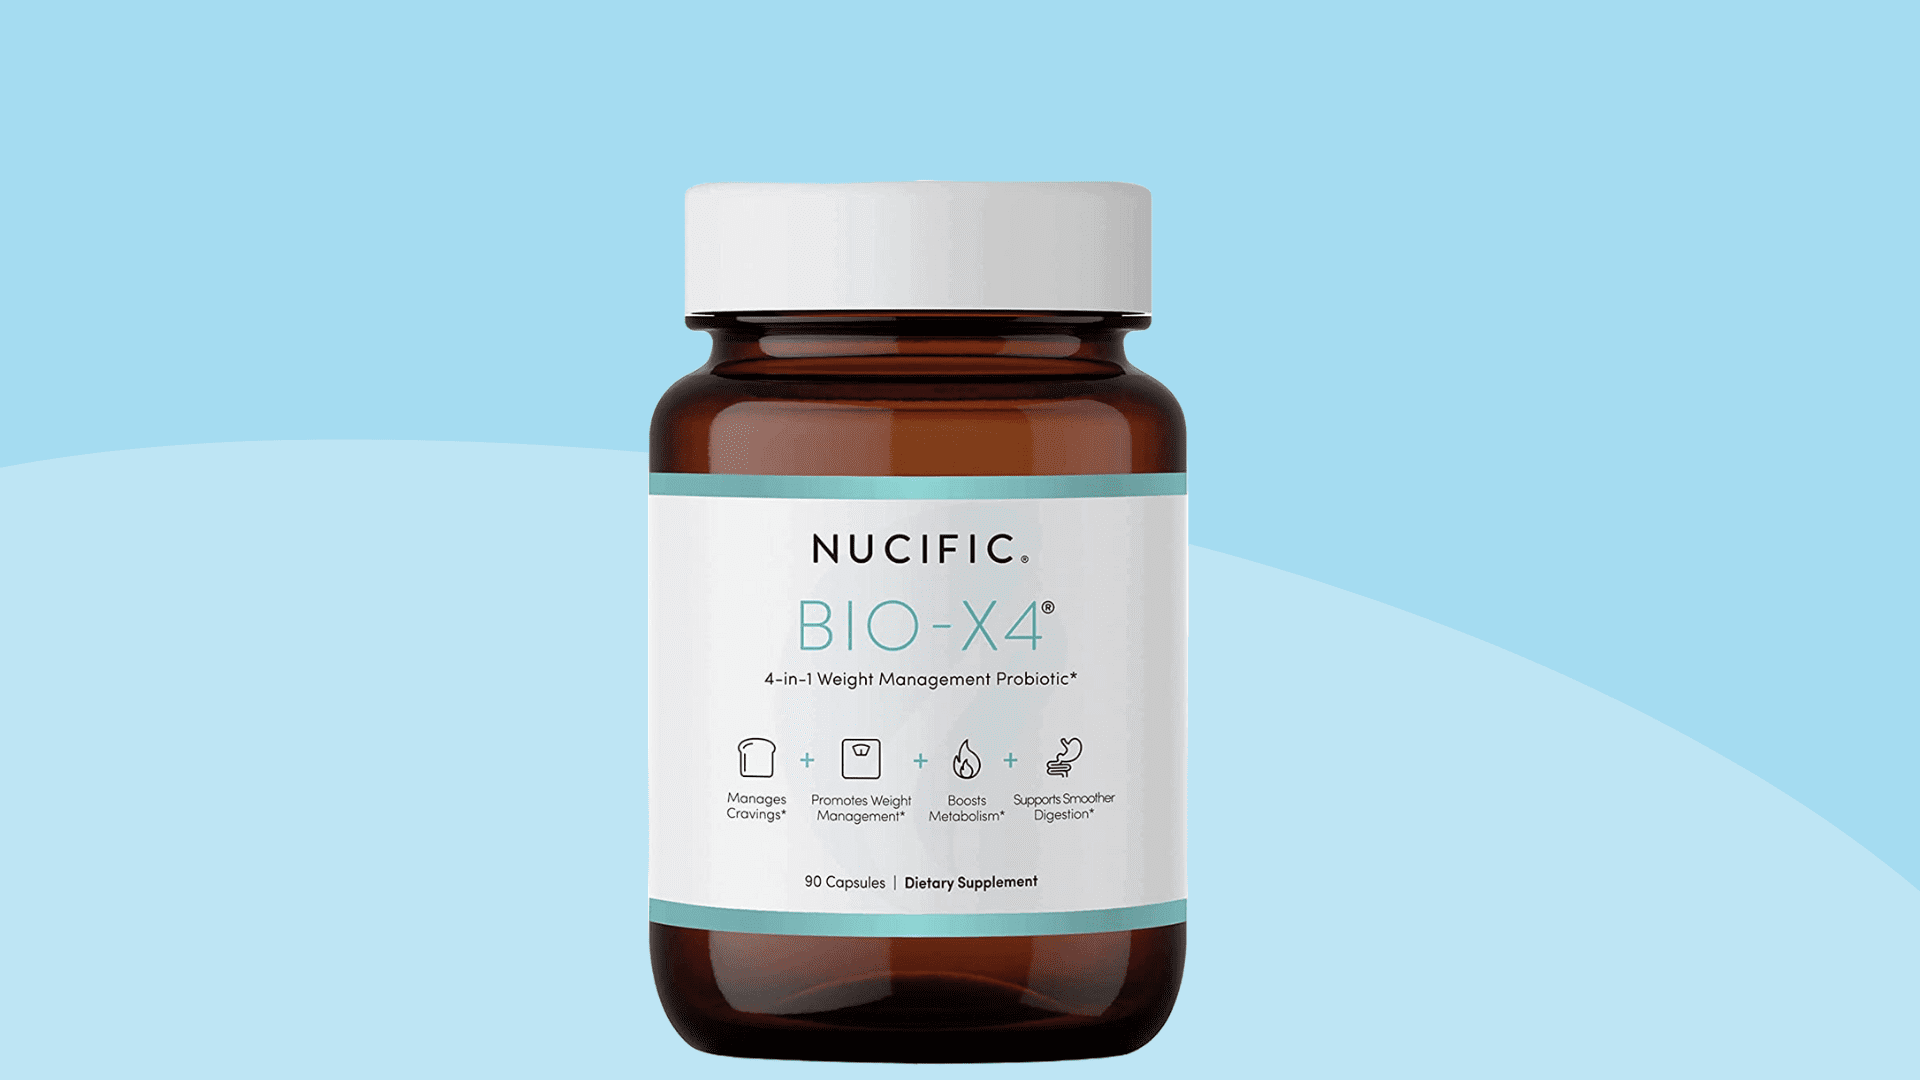 Nucfic Bio X4 Probiotic Supplement in Center